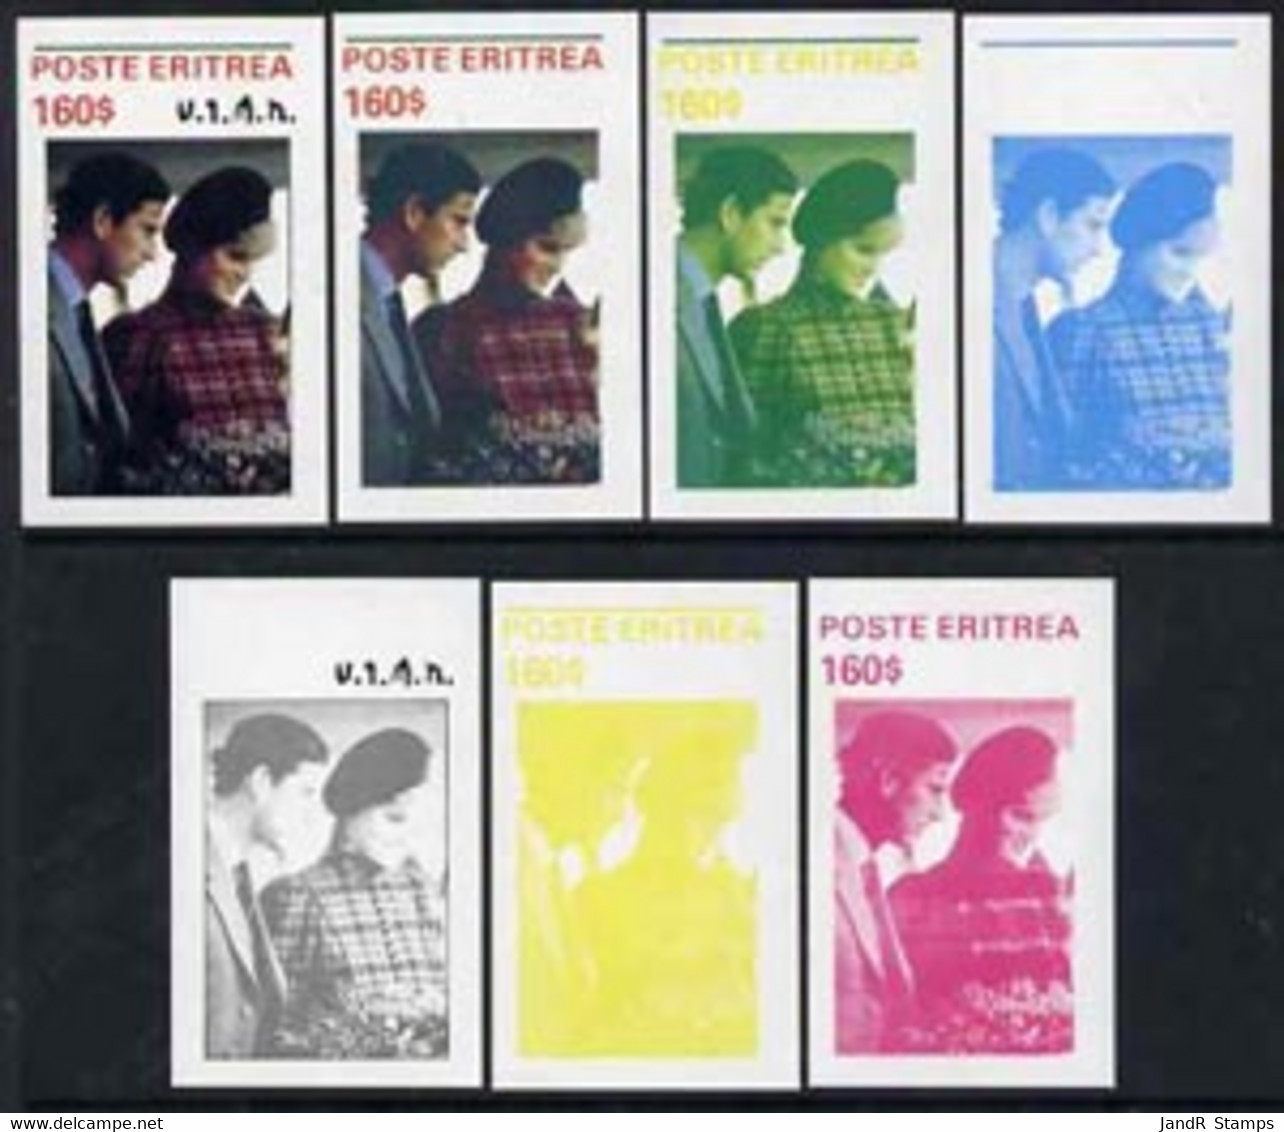 Eritrea 1982 Princess Di's 21st Birthday Imperf Souvenir Sheet ($160 Value) Set Of 7 Progressive Proofs Comprising The 4 - Eritrea